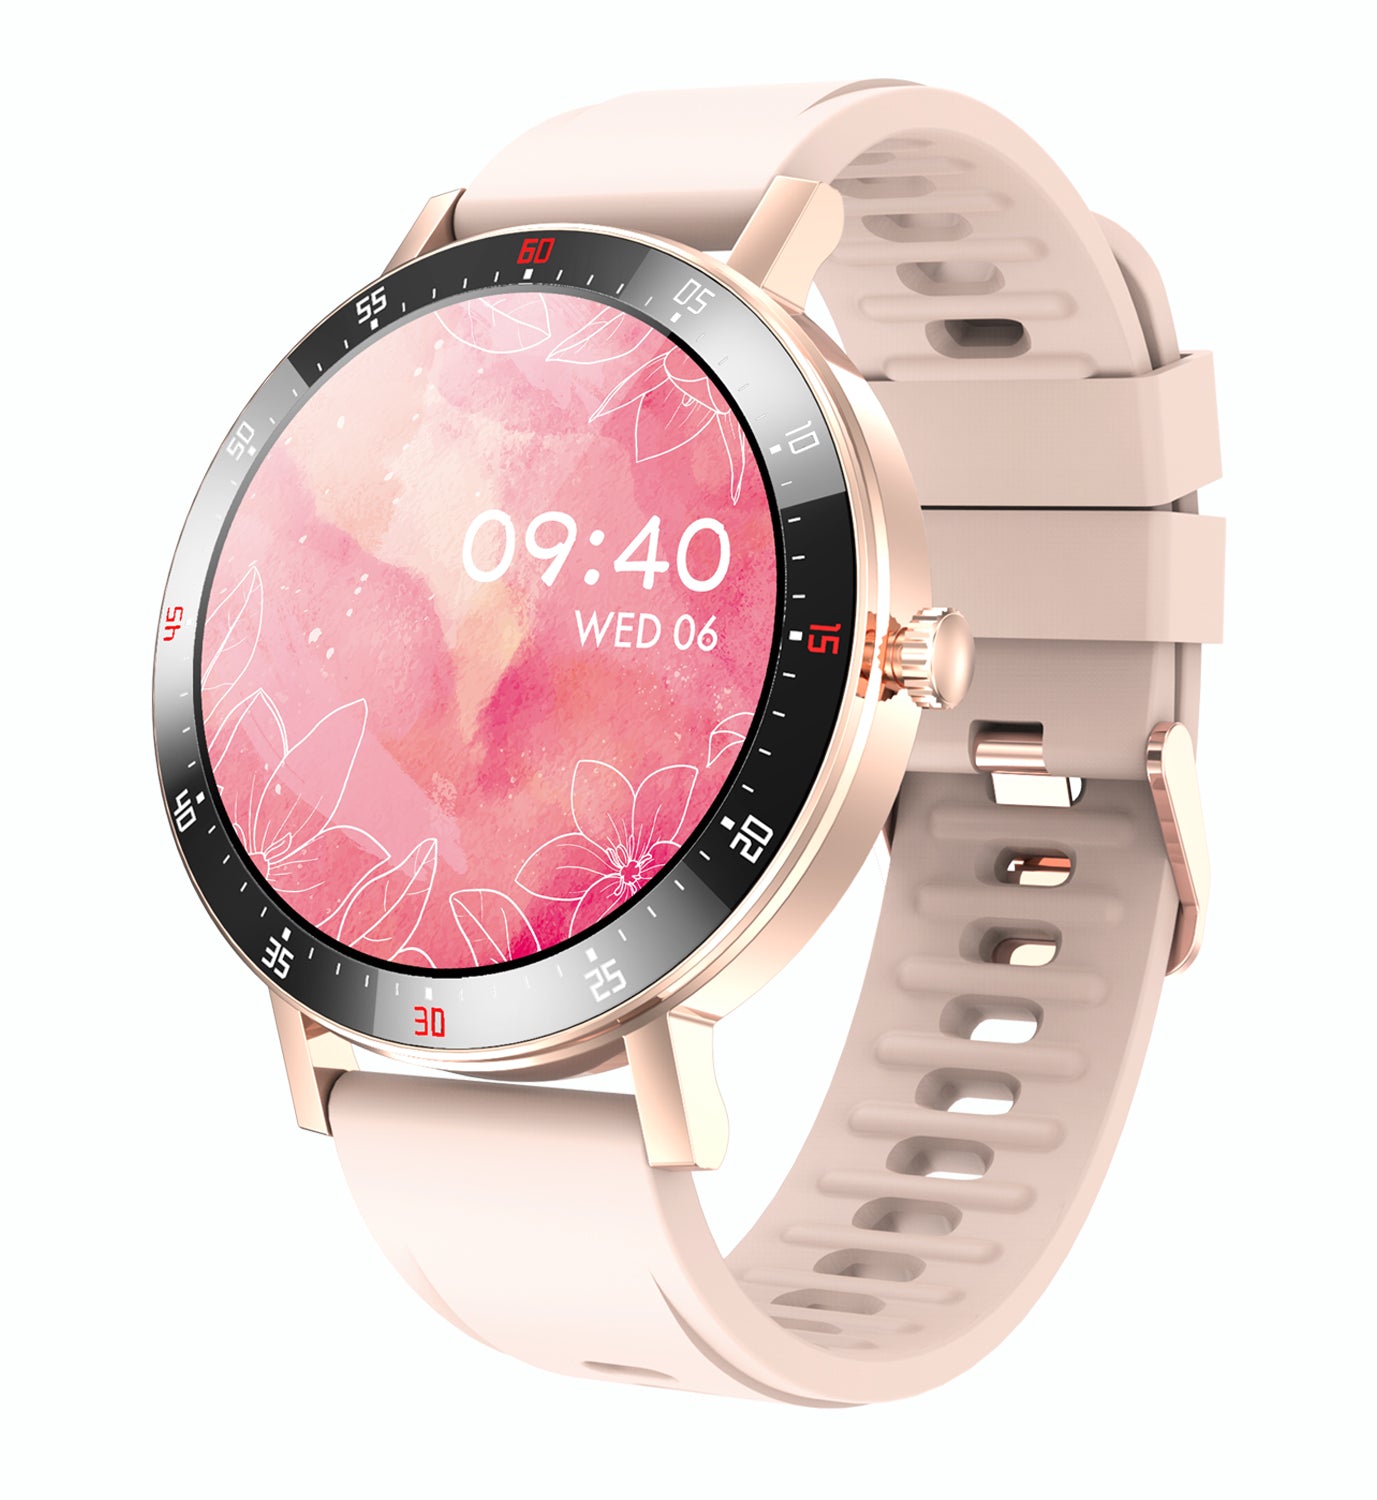 MorePro F18 smartwatch - MorePro